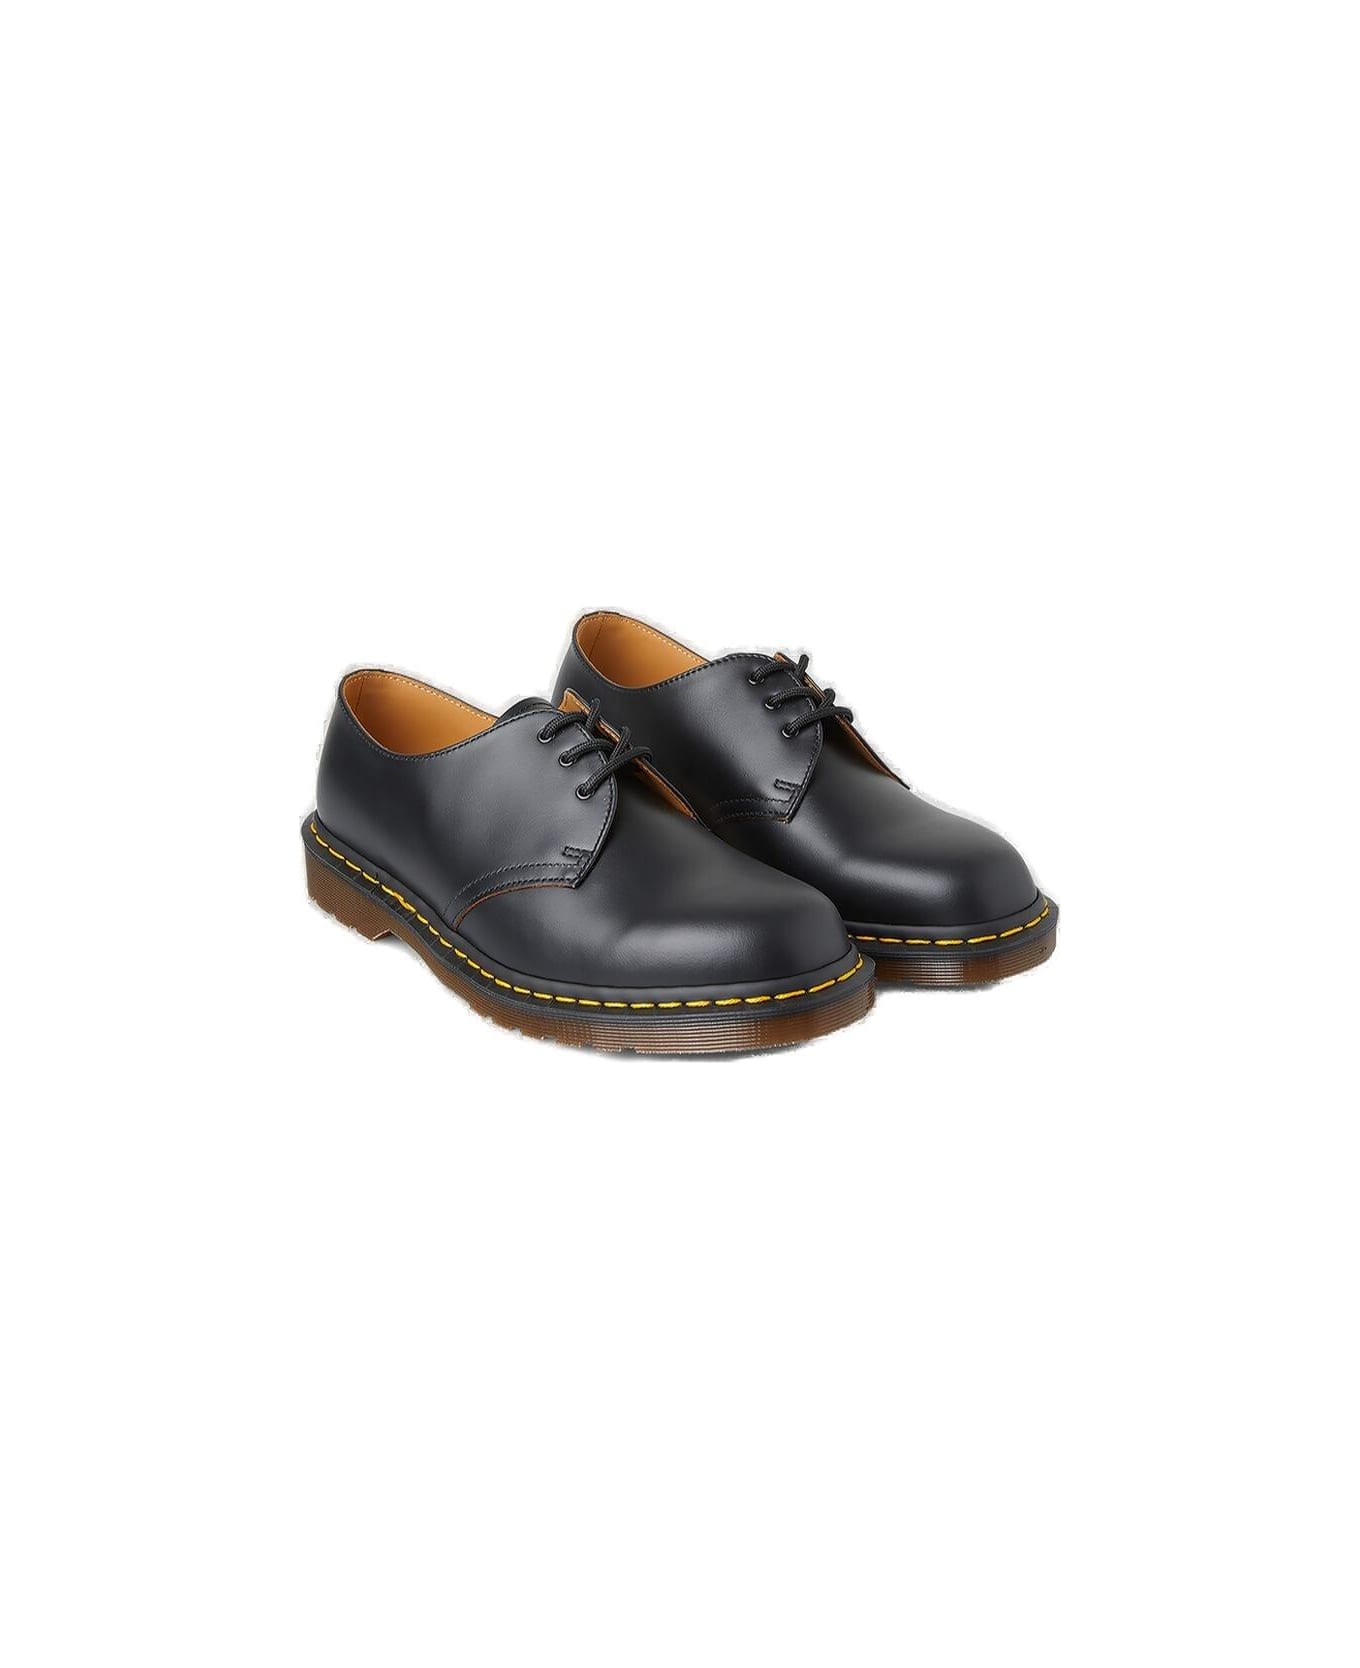 Dr. Martens Vintage 1461 Lace-up Shoes - BLACK name:464